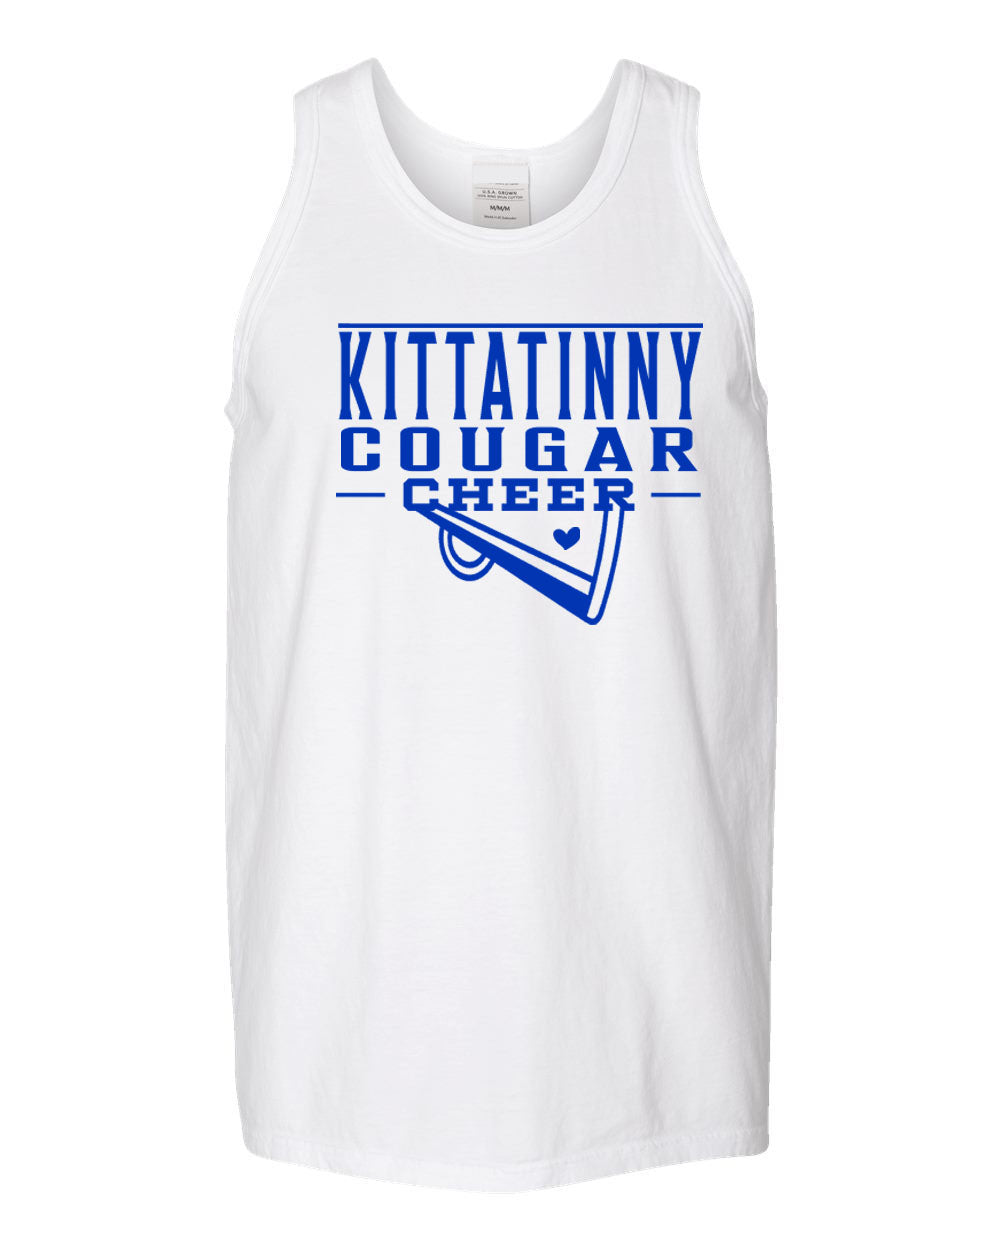 Kittatinny Cheer design 11 Muscle Tank Top